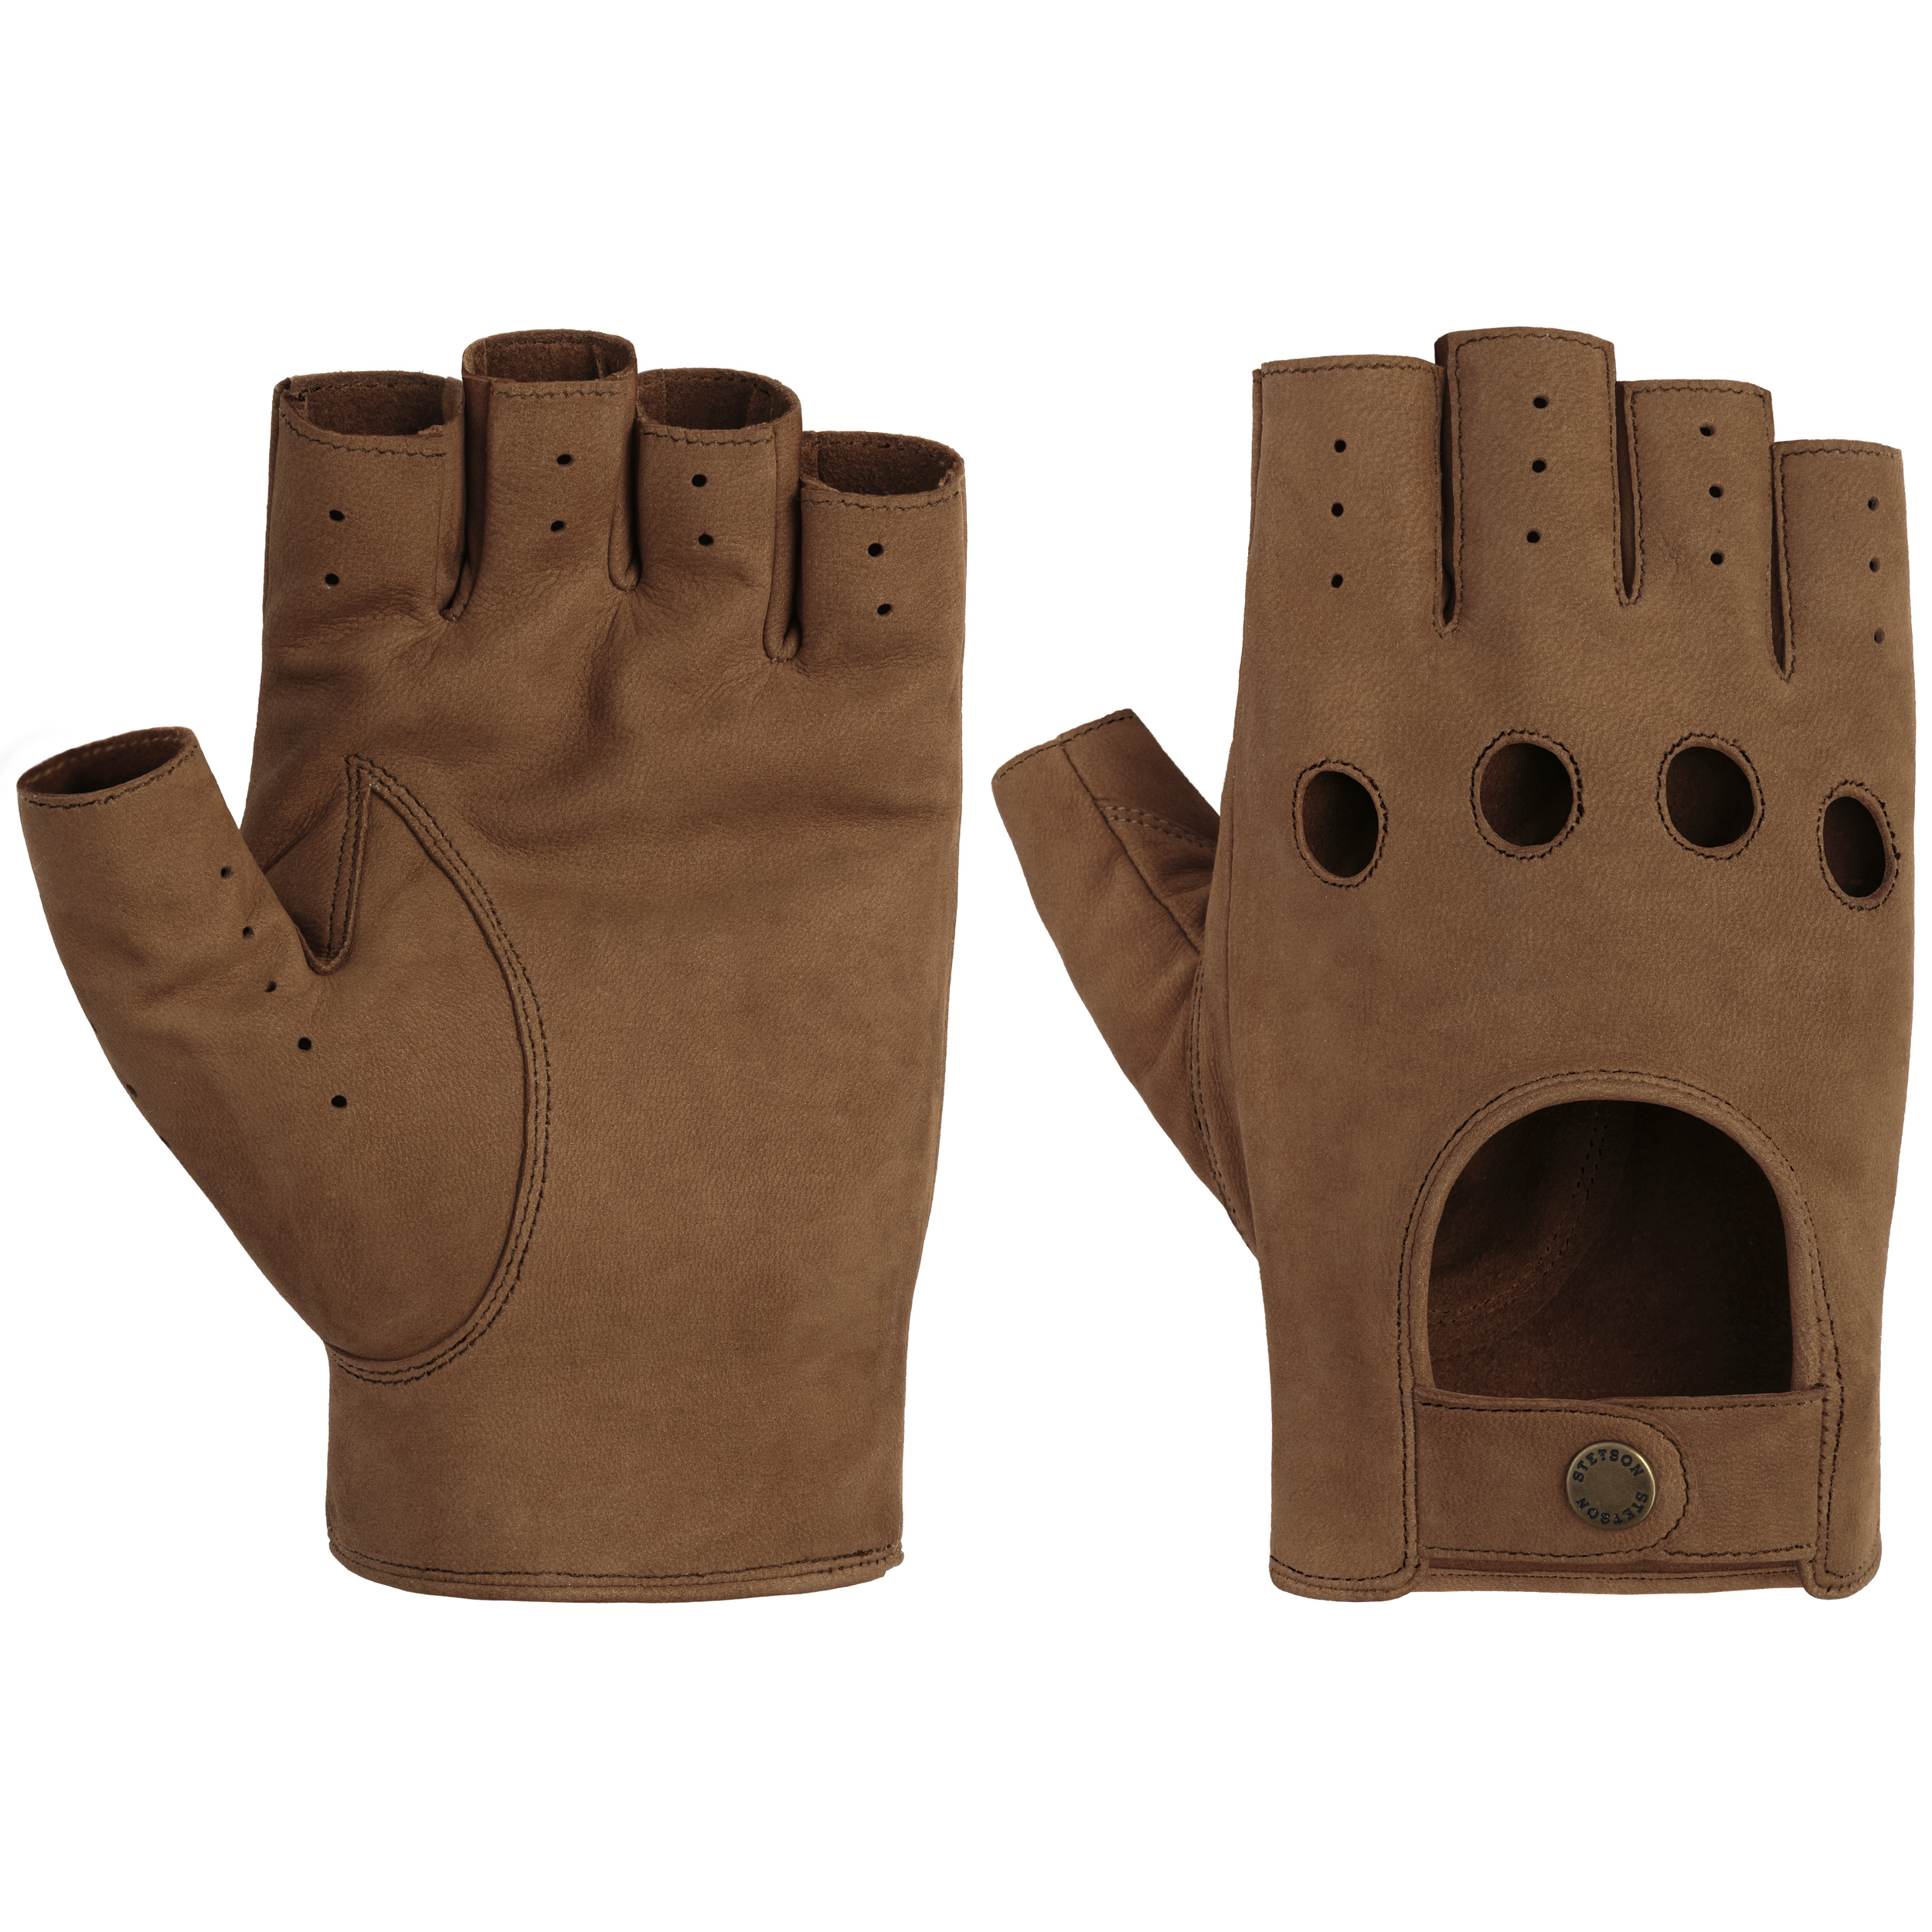 Stetson Classic Nappa Lederhandschuhe Handschuhe Herrenhandschuhe Fingerhandschuhe Damen/Herren mit Futter Herbst-Winter